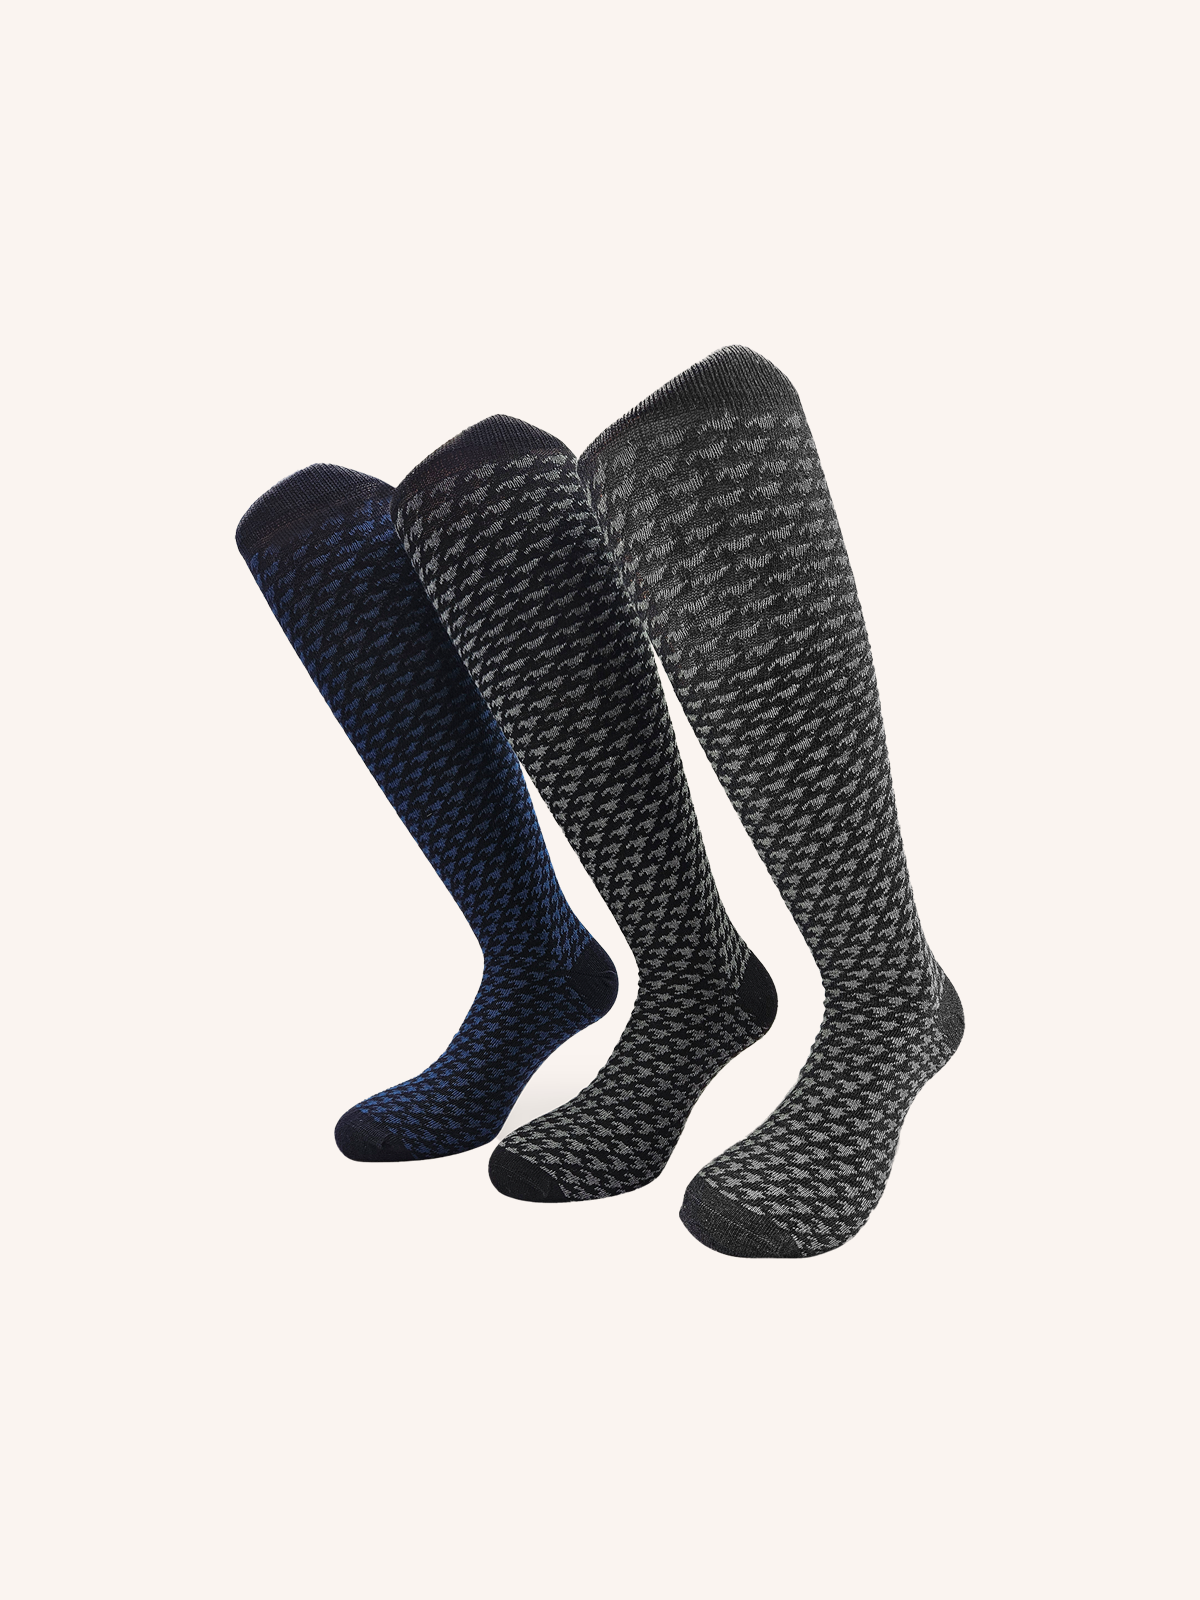 Long Socks in Jacquard Cotton for Men | Plain Color | Pack of 3 pairs | Jack L